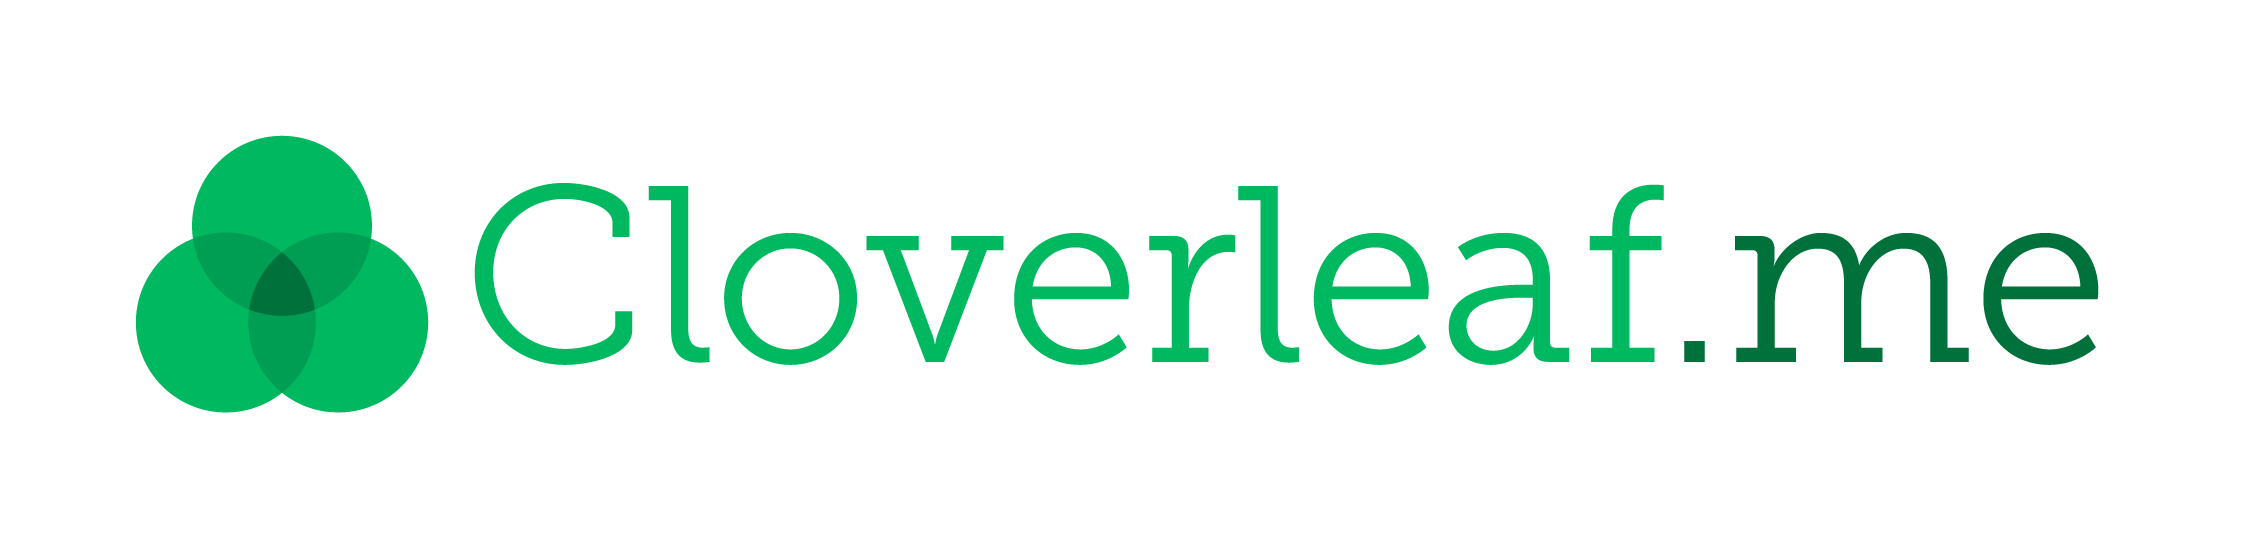 cloverleaf.md logo